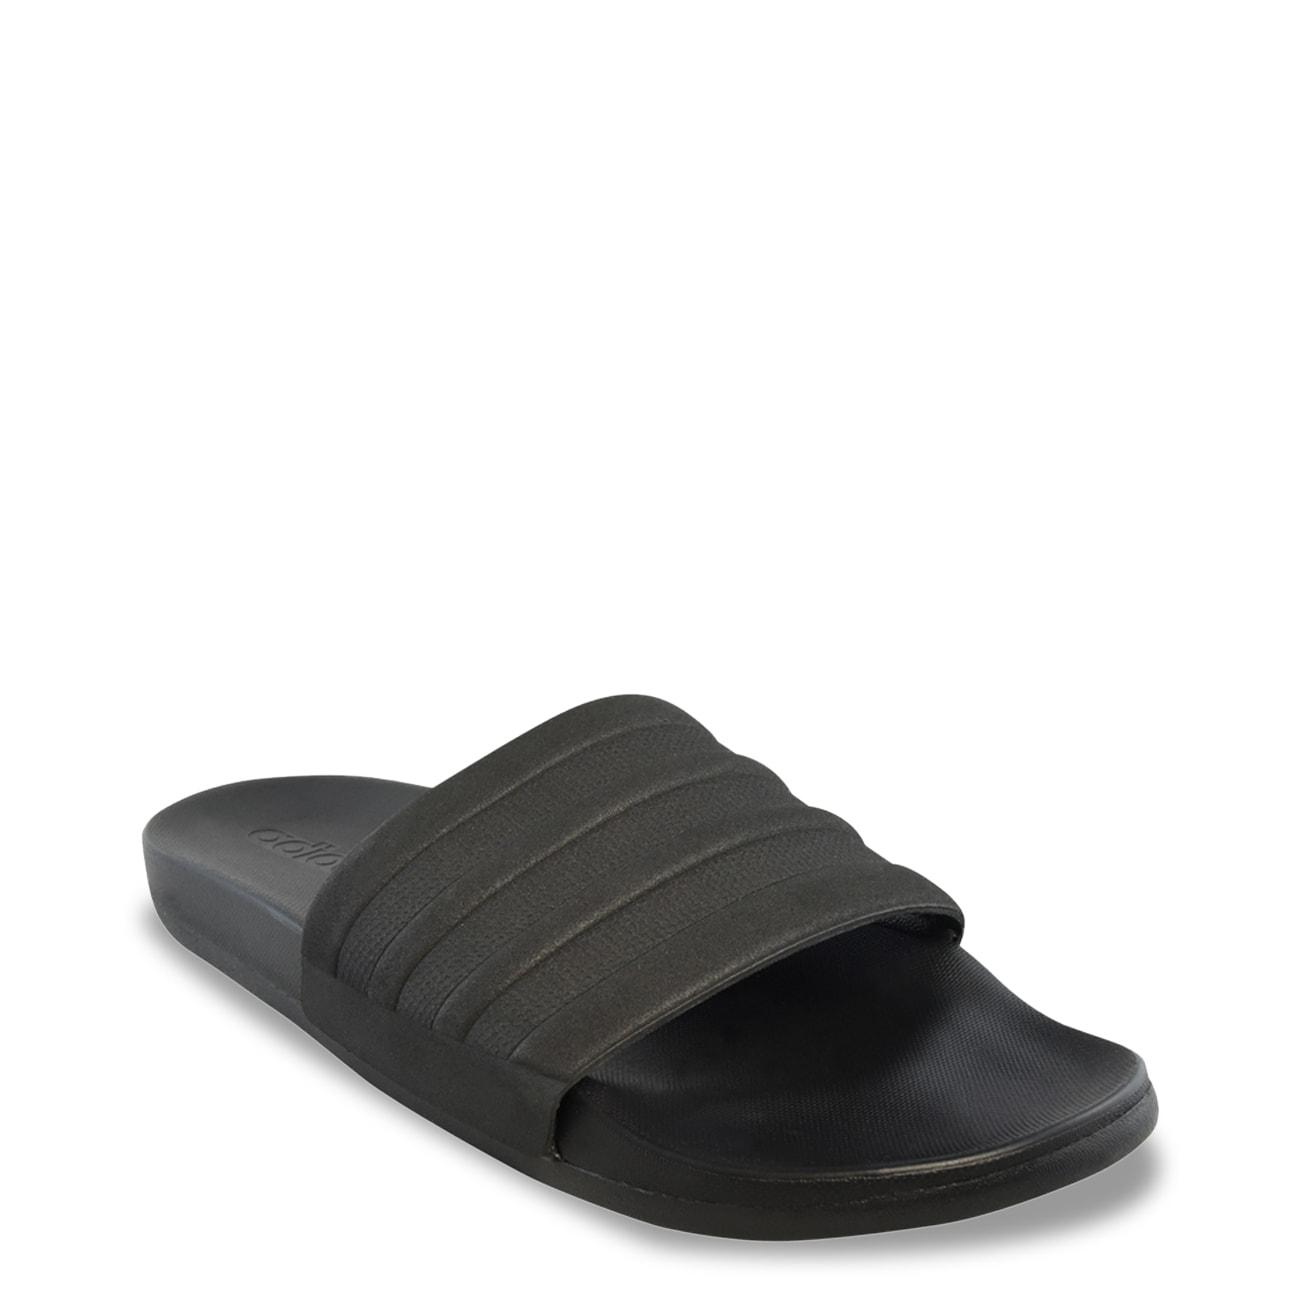 Adidas Men's Adilette Comfort Slide Sandal | The Shoe Company